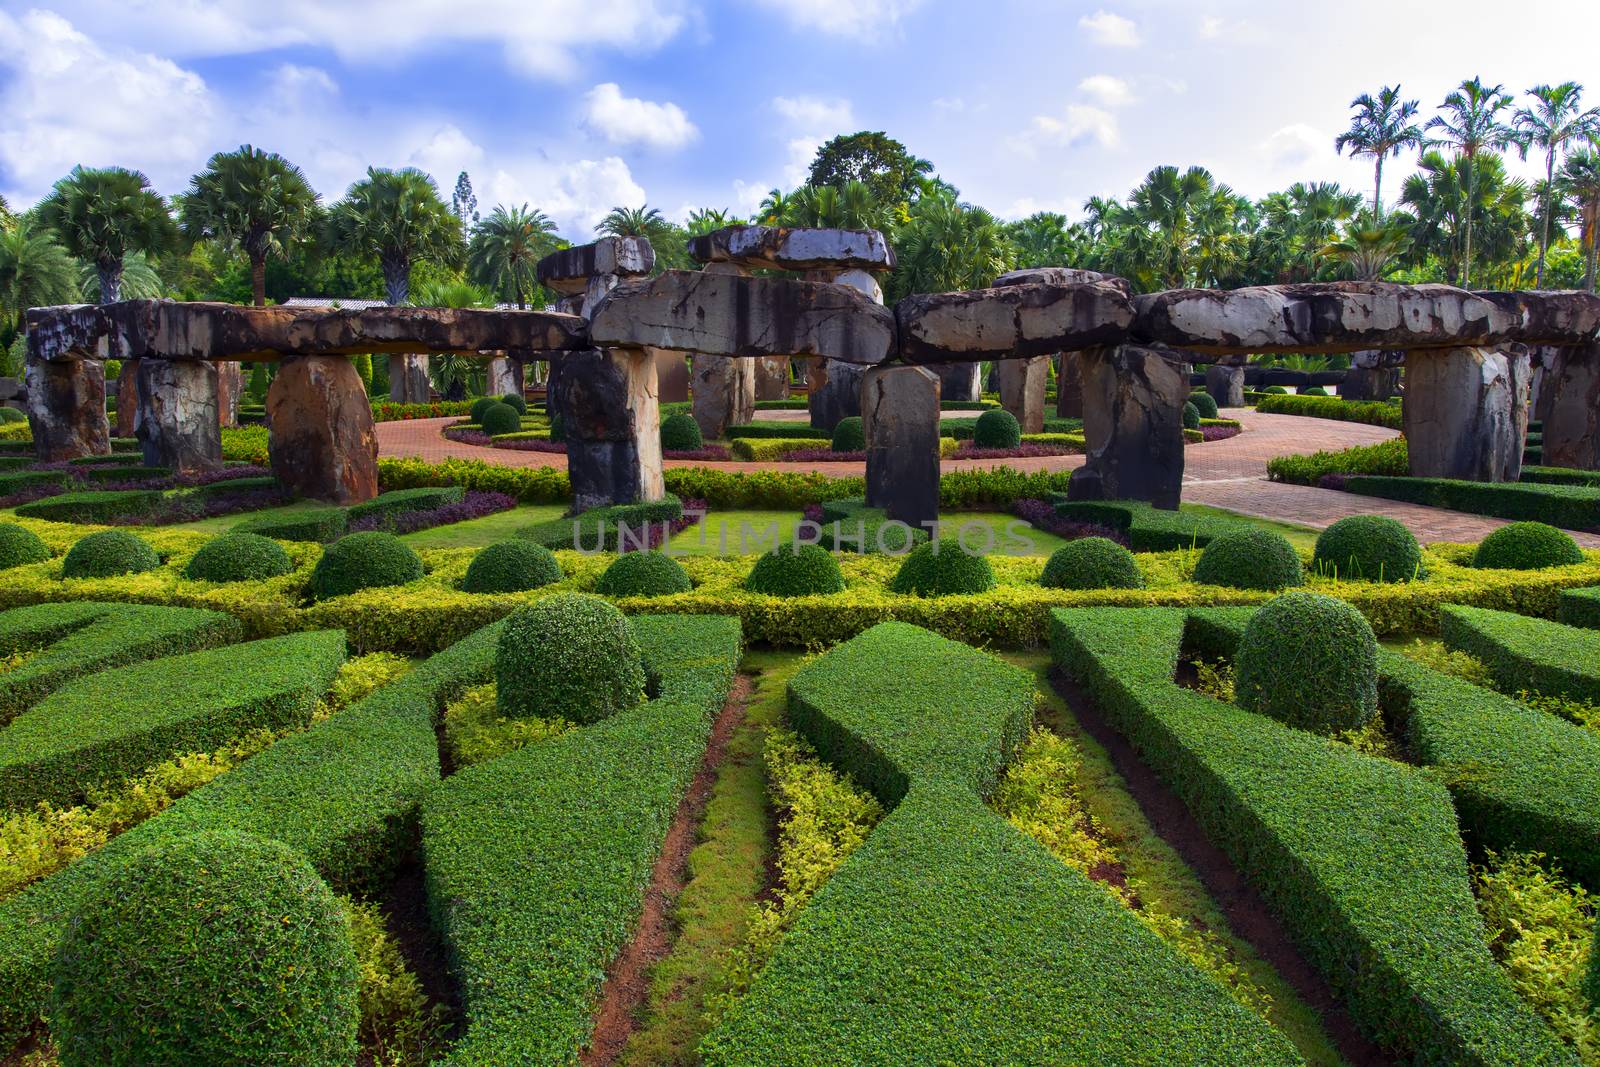 Elements of the French Garden near Stonehenge. Thailand.